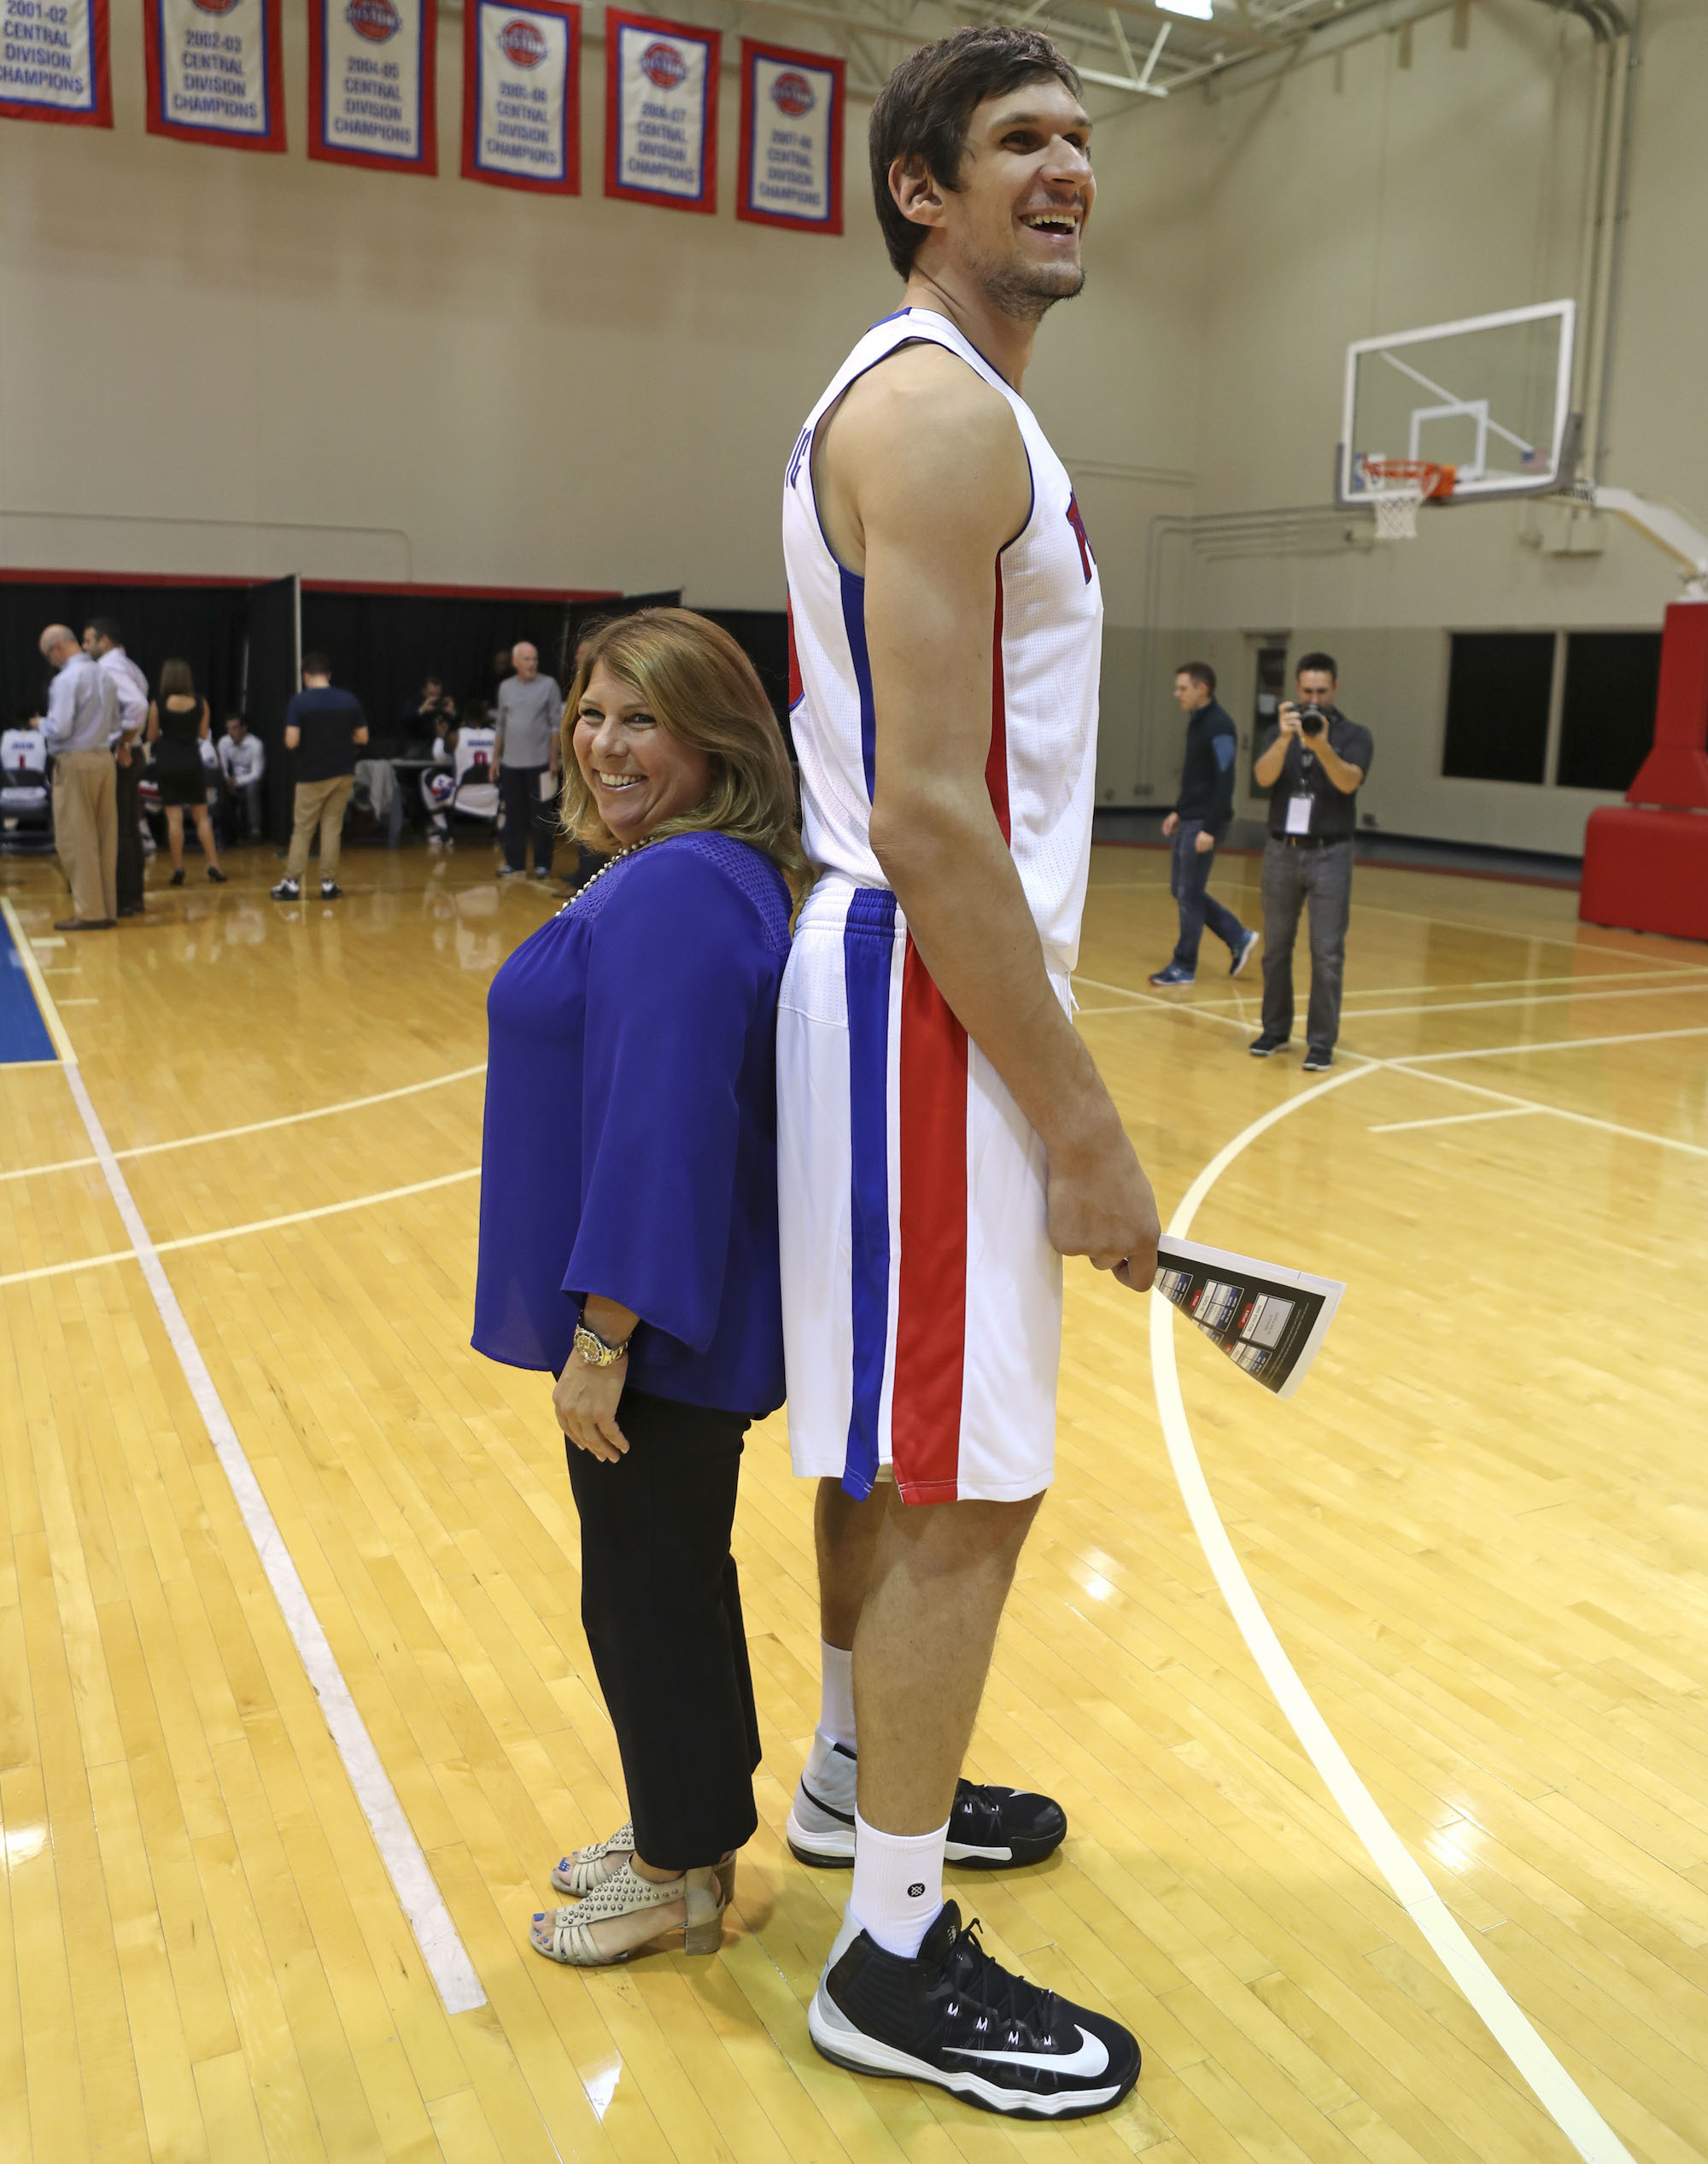 Tallest and shortest NBA players ever | Yardbarker.com